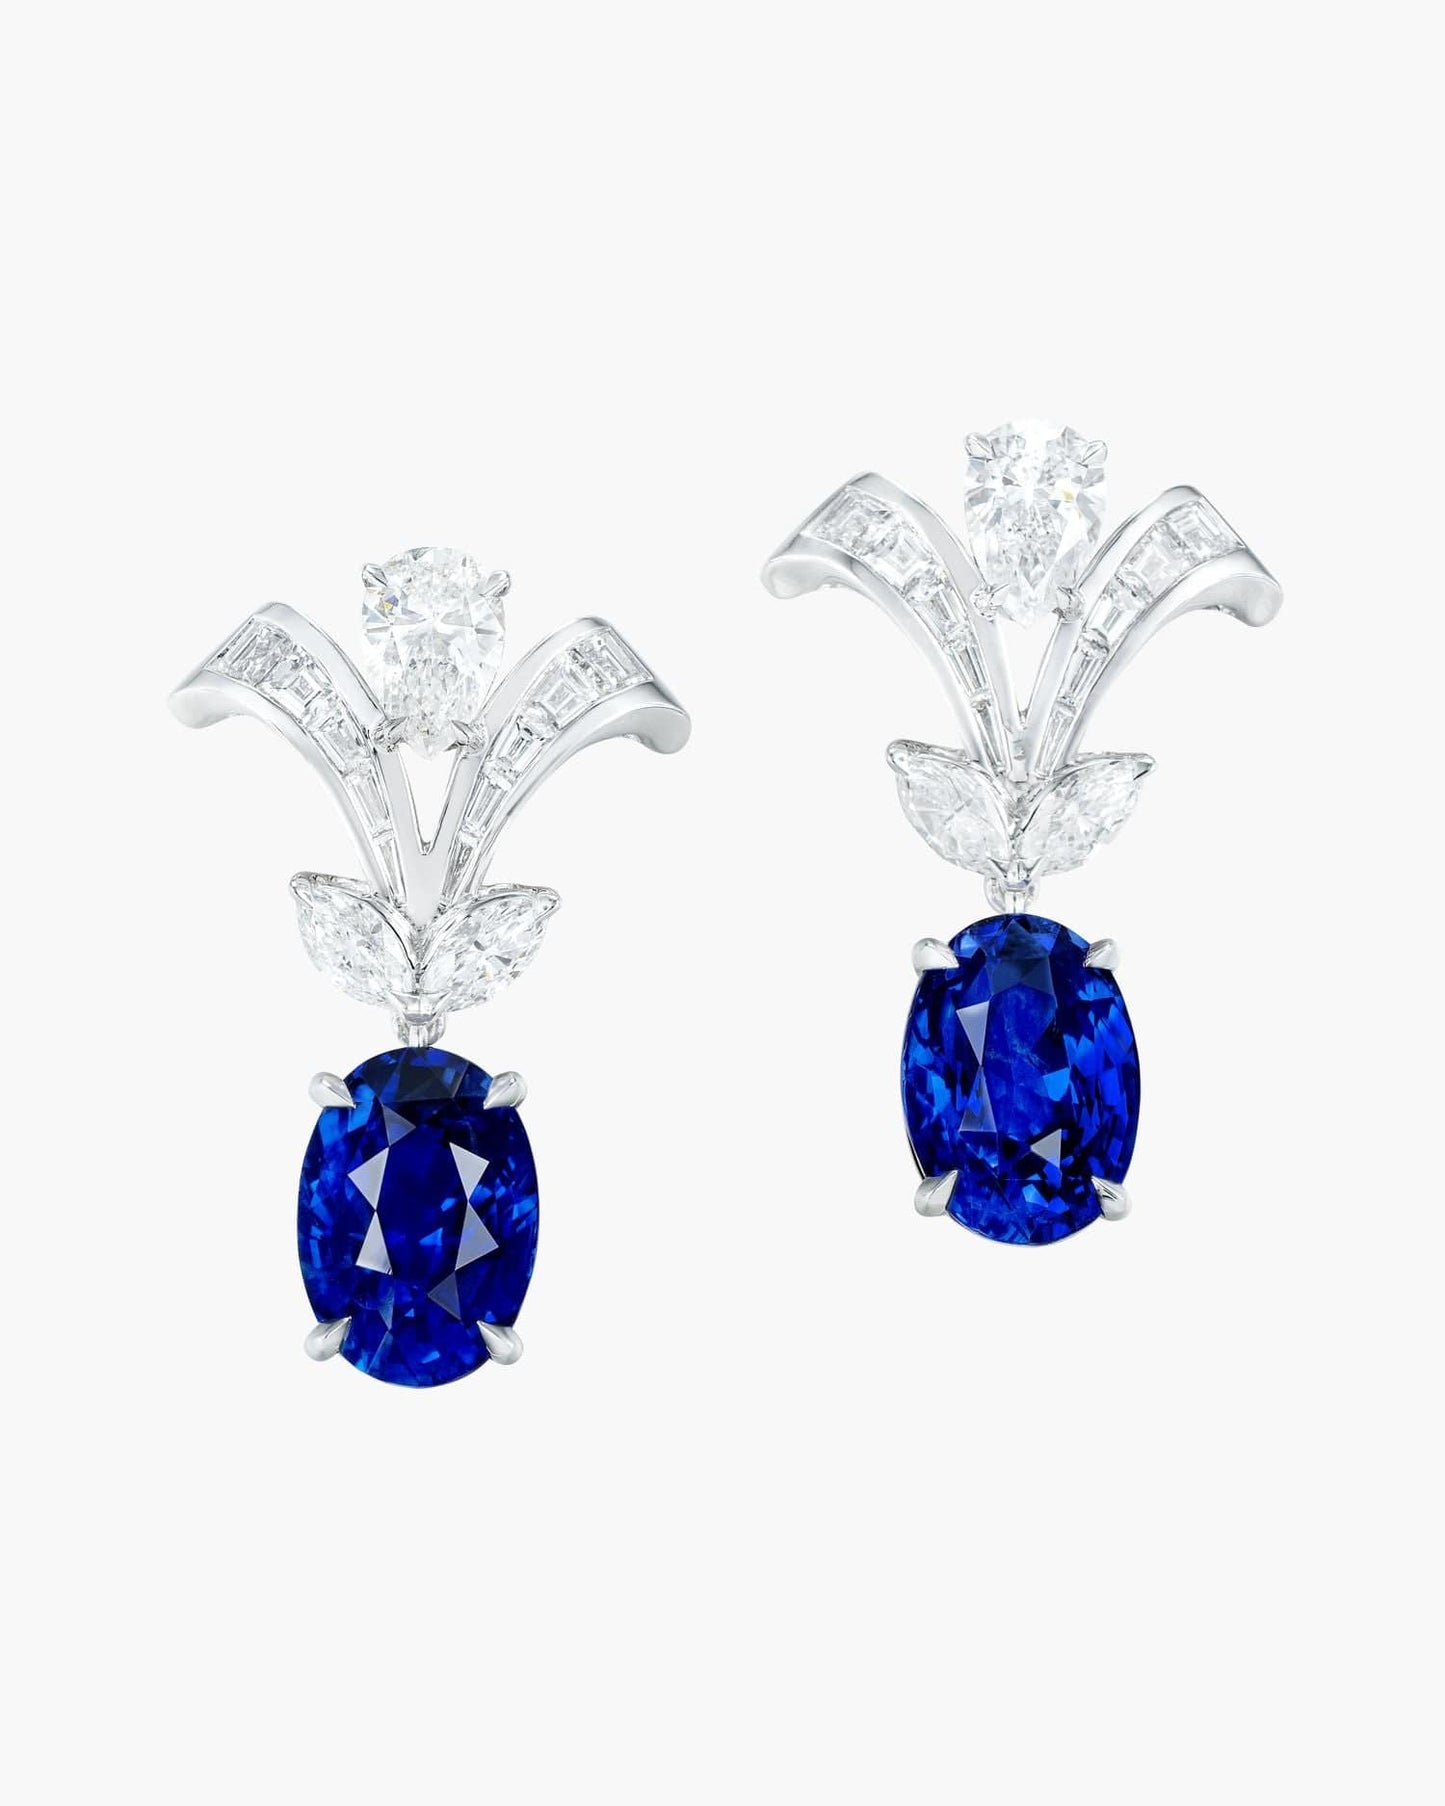 8.18 carat Oval Shape Ceylon Sapphire and Diamond Earrings